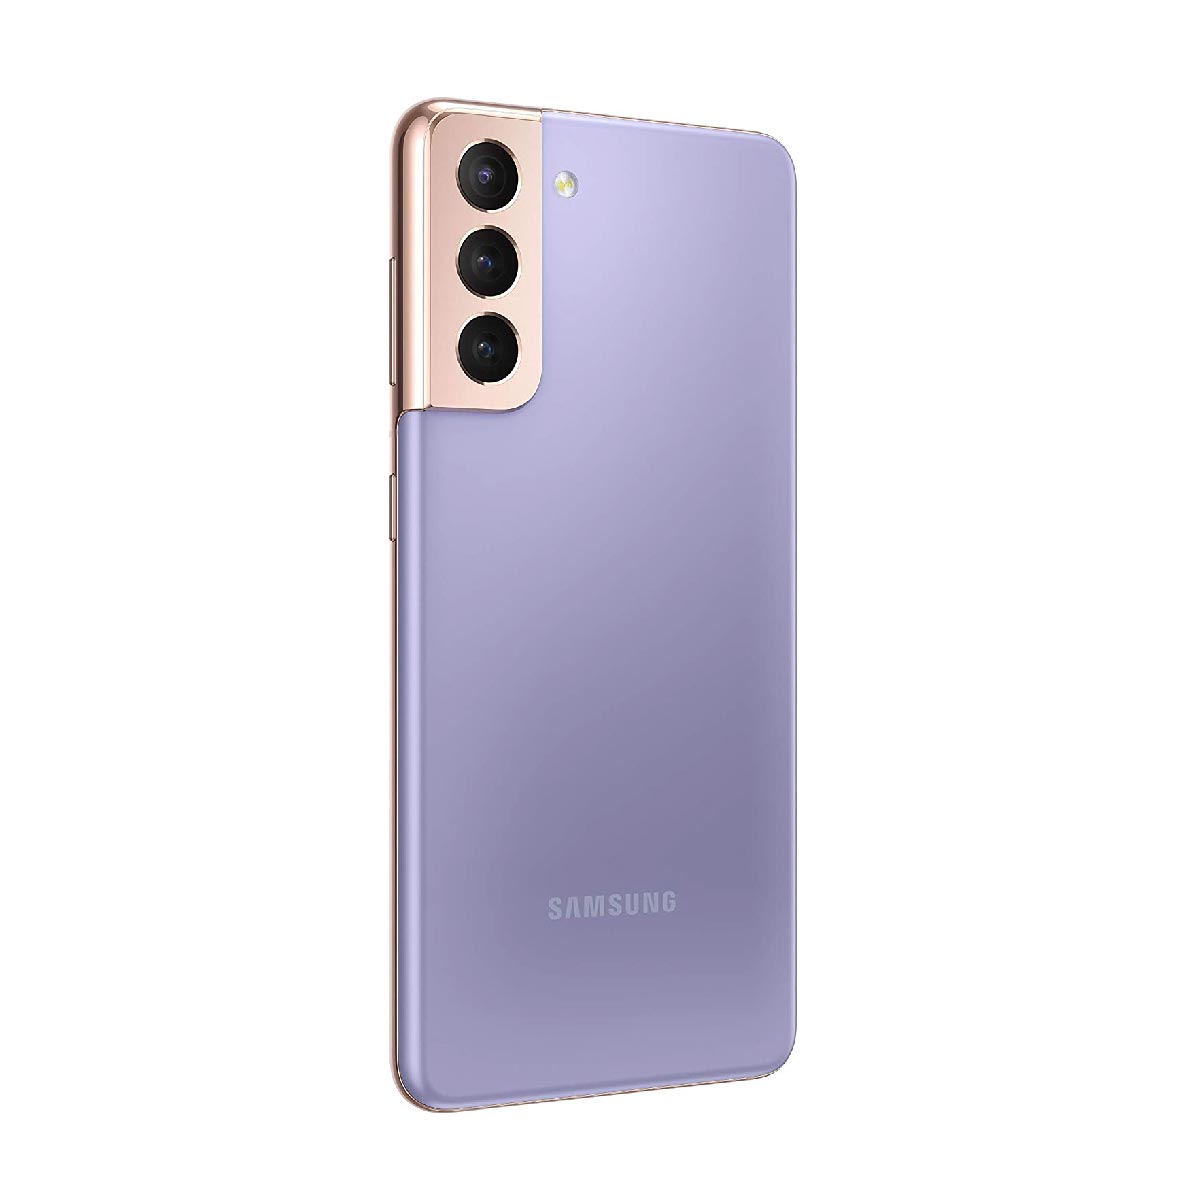 Samsung Galaxy S21 5G 8GB RAM 128GB -  Factory Unlocked